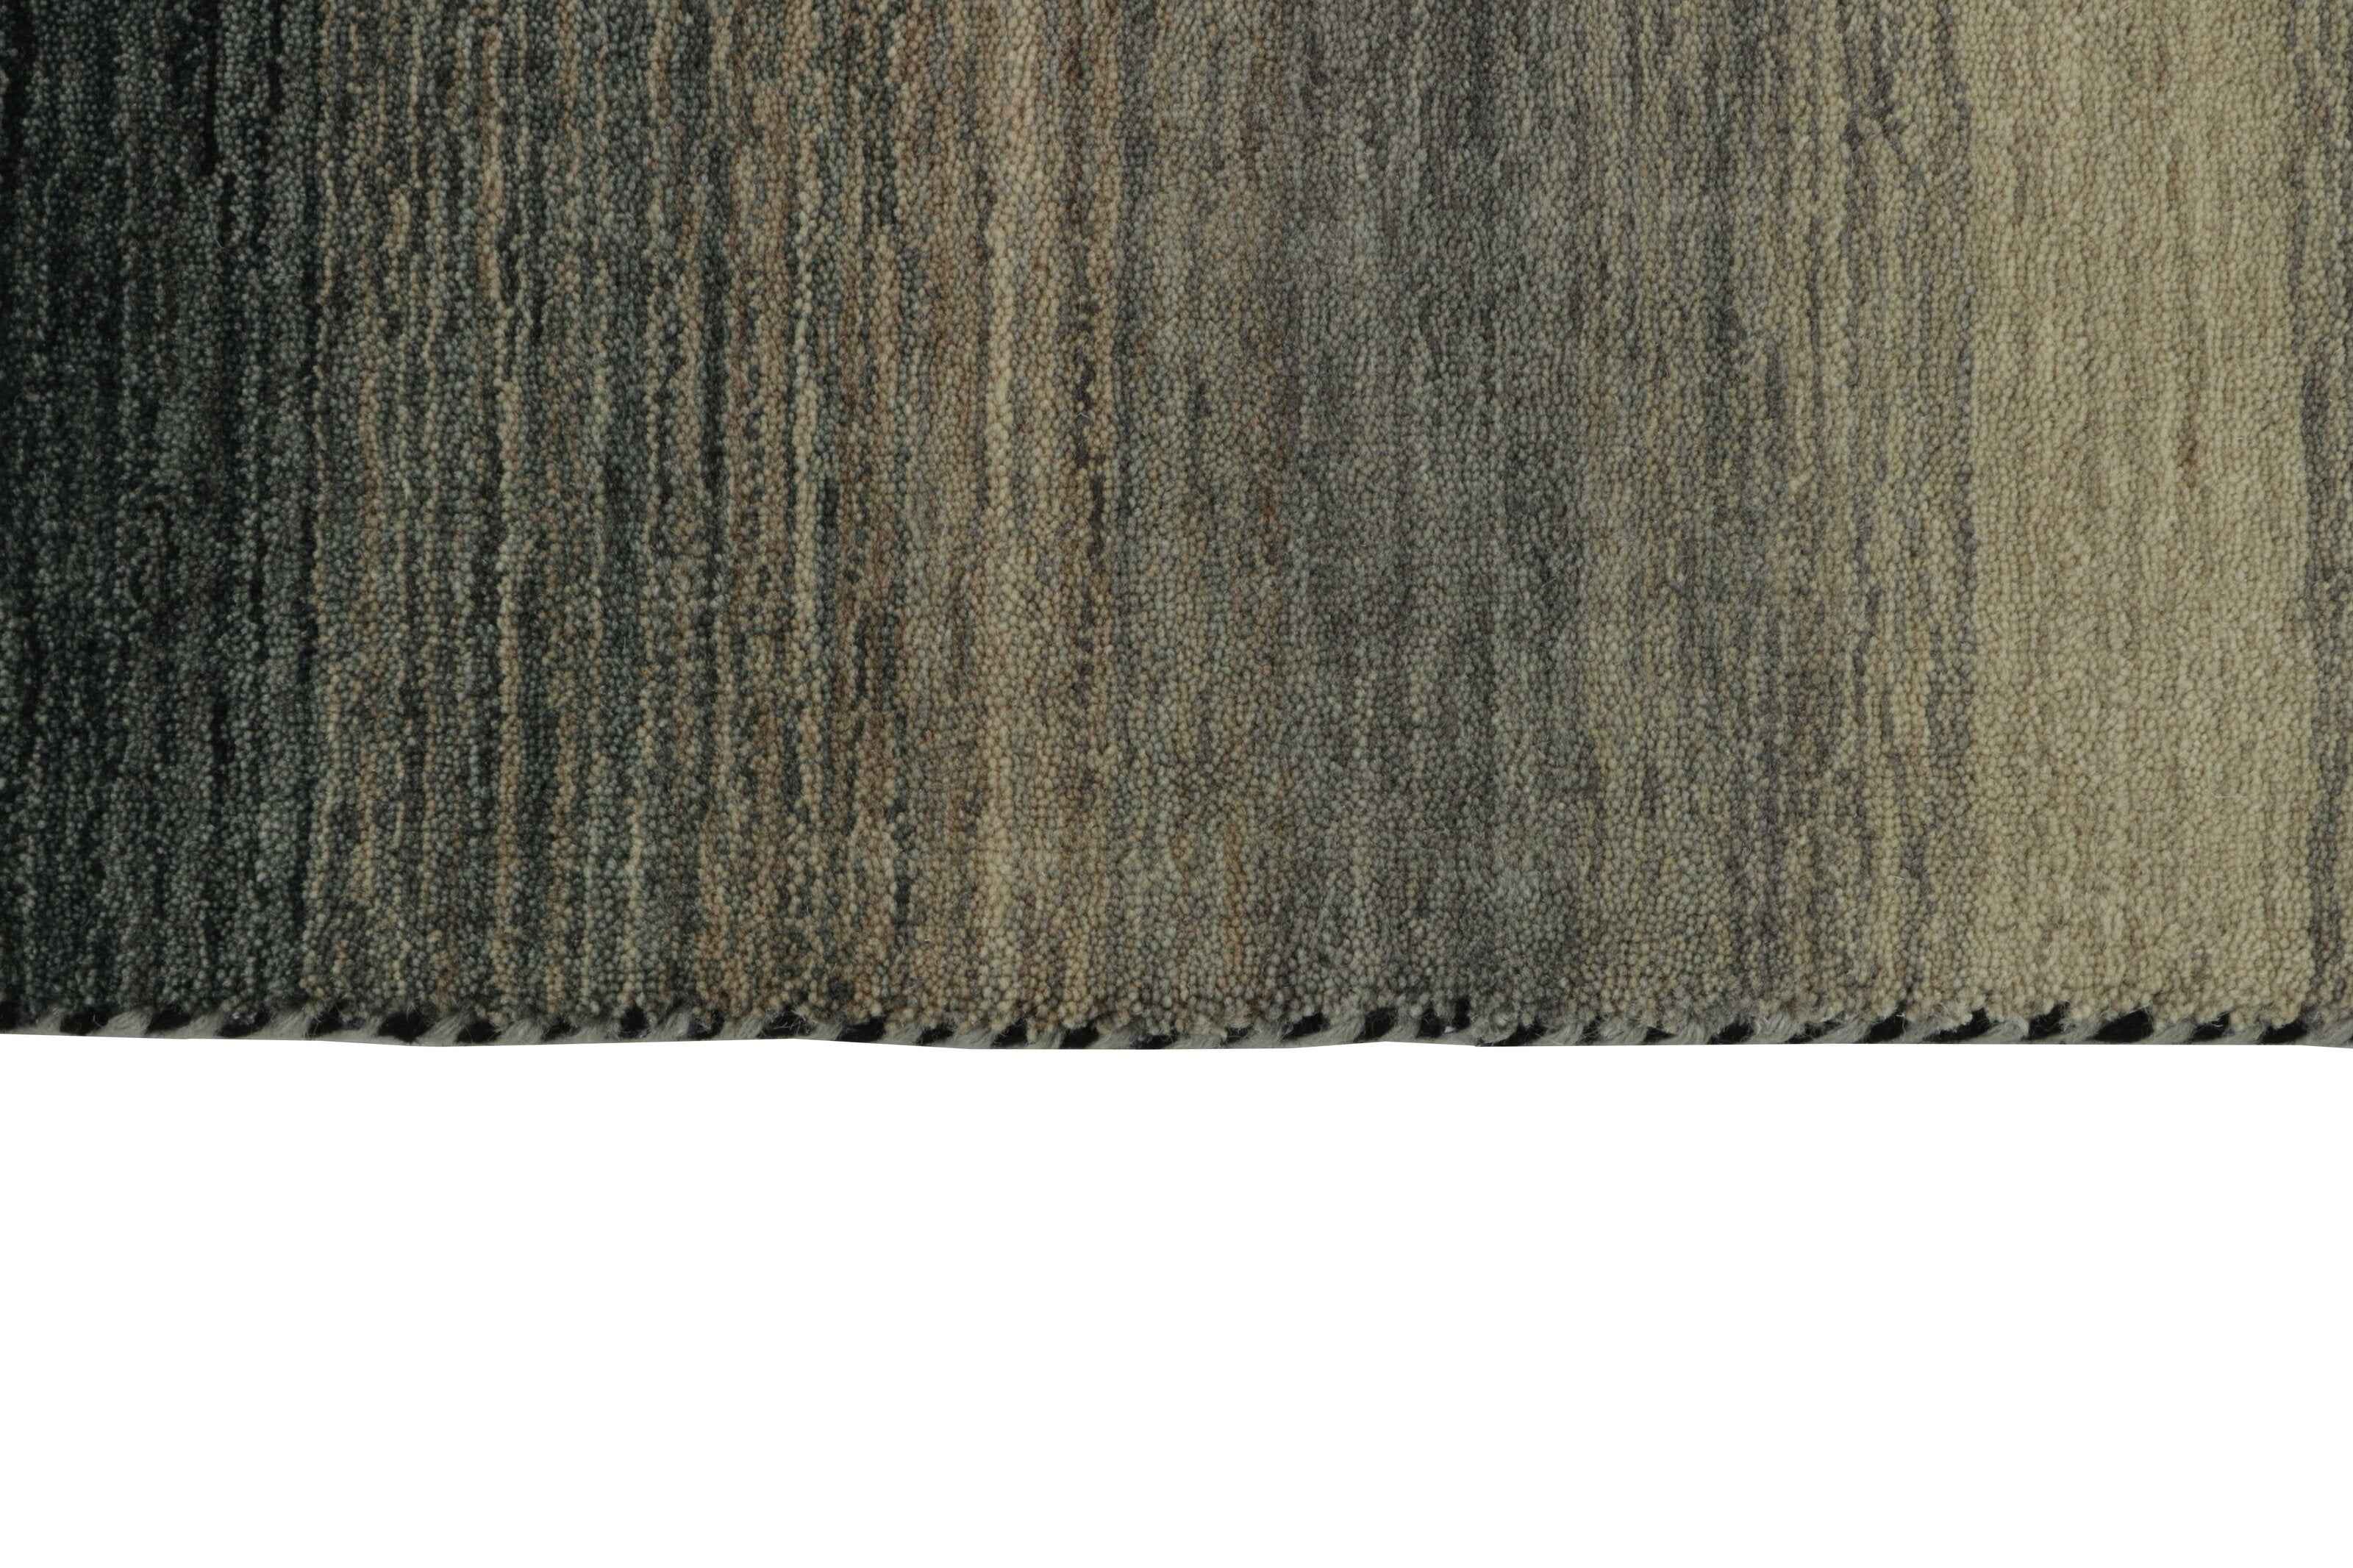 90 x 90 cm Indian Wool Black Rug-6029, Black Grey - Rugmaster